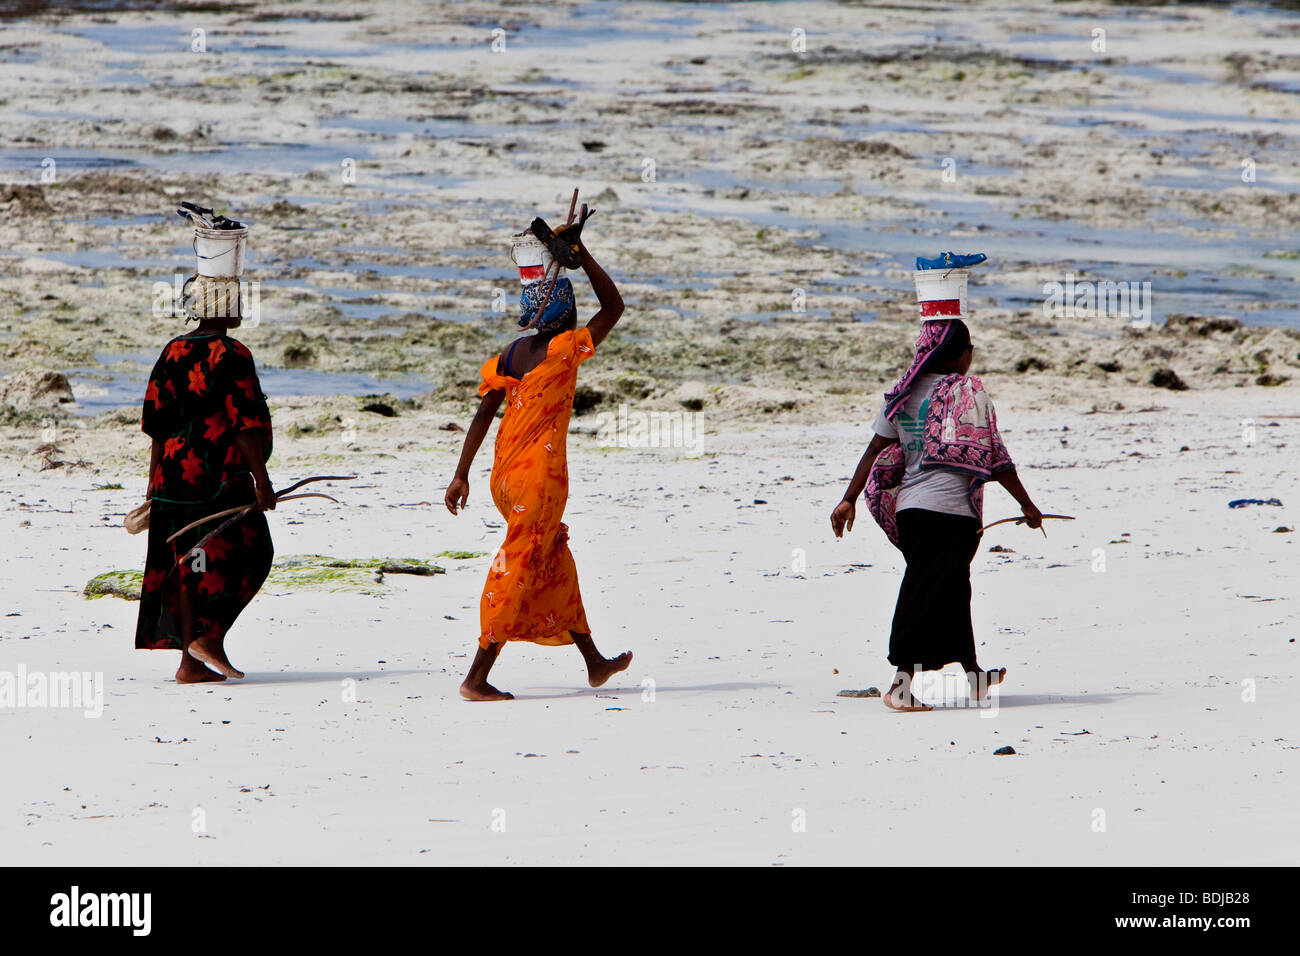 Women carry their caught fish in buckets on their heads, Zanzibar, Tanzania, Africa Stock Photo